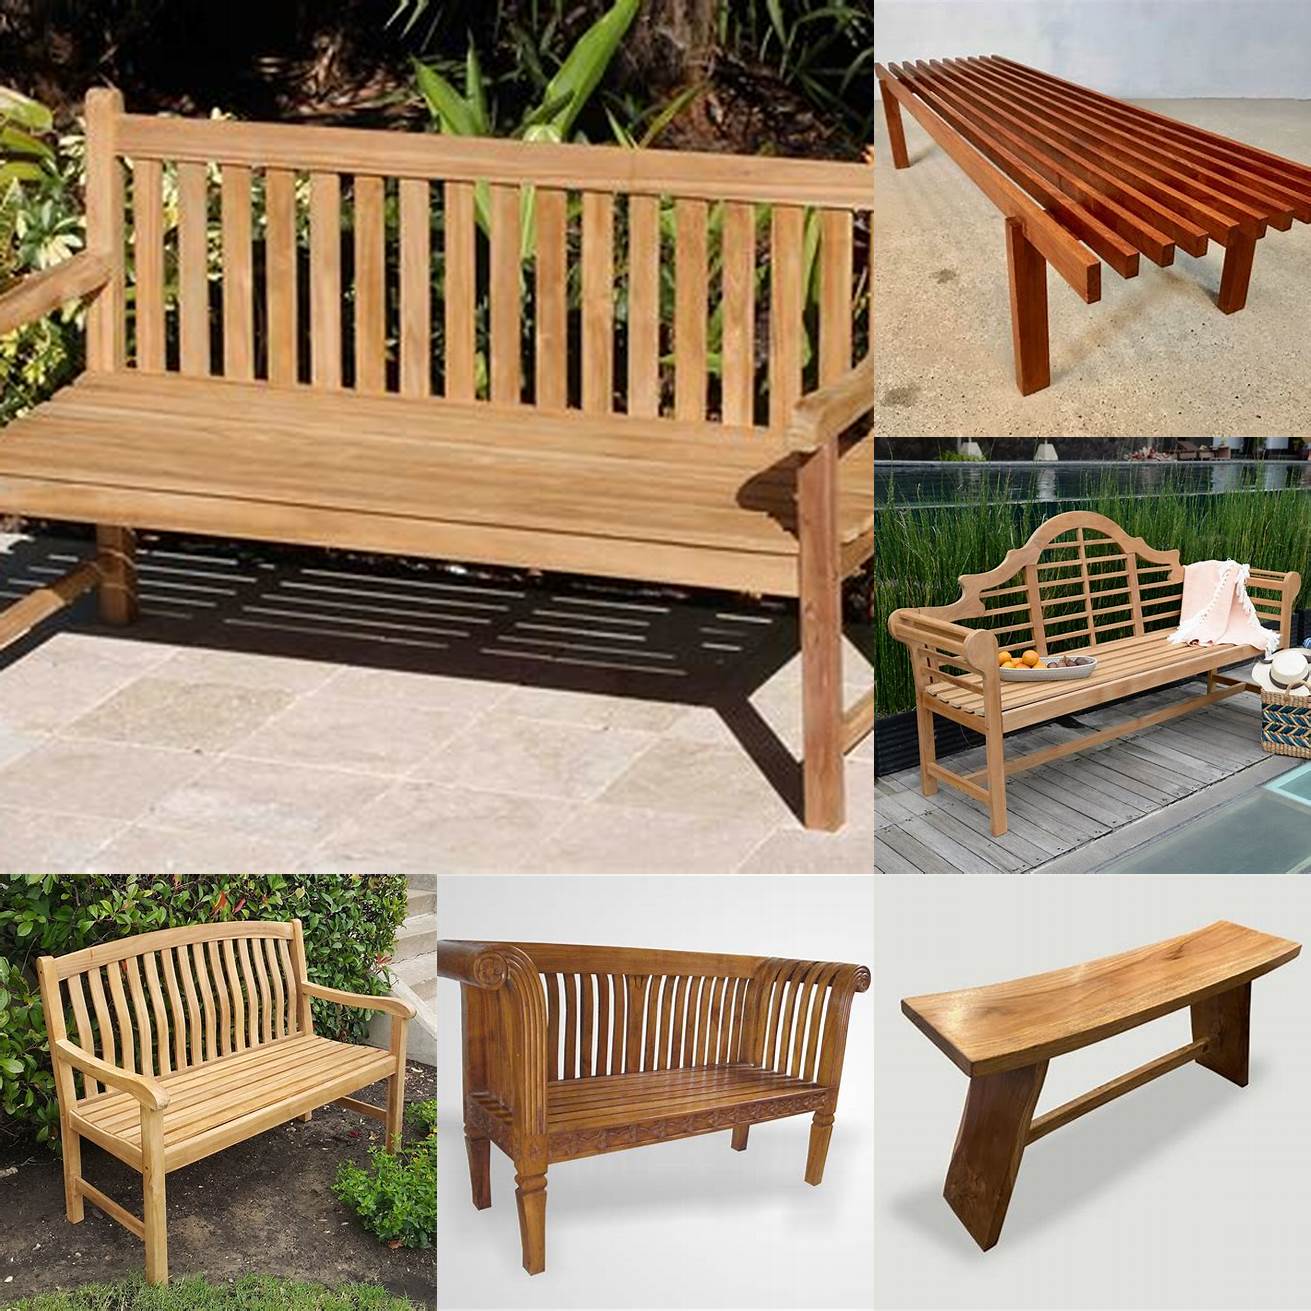 A minimalist-style teak wood bench